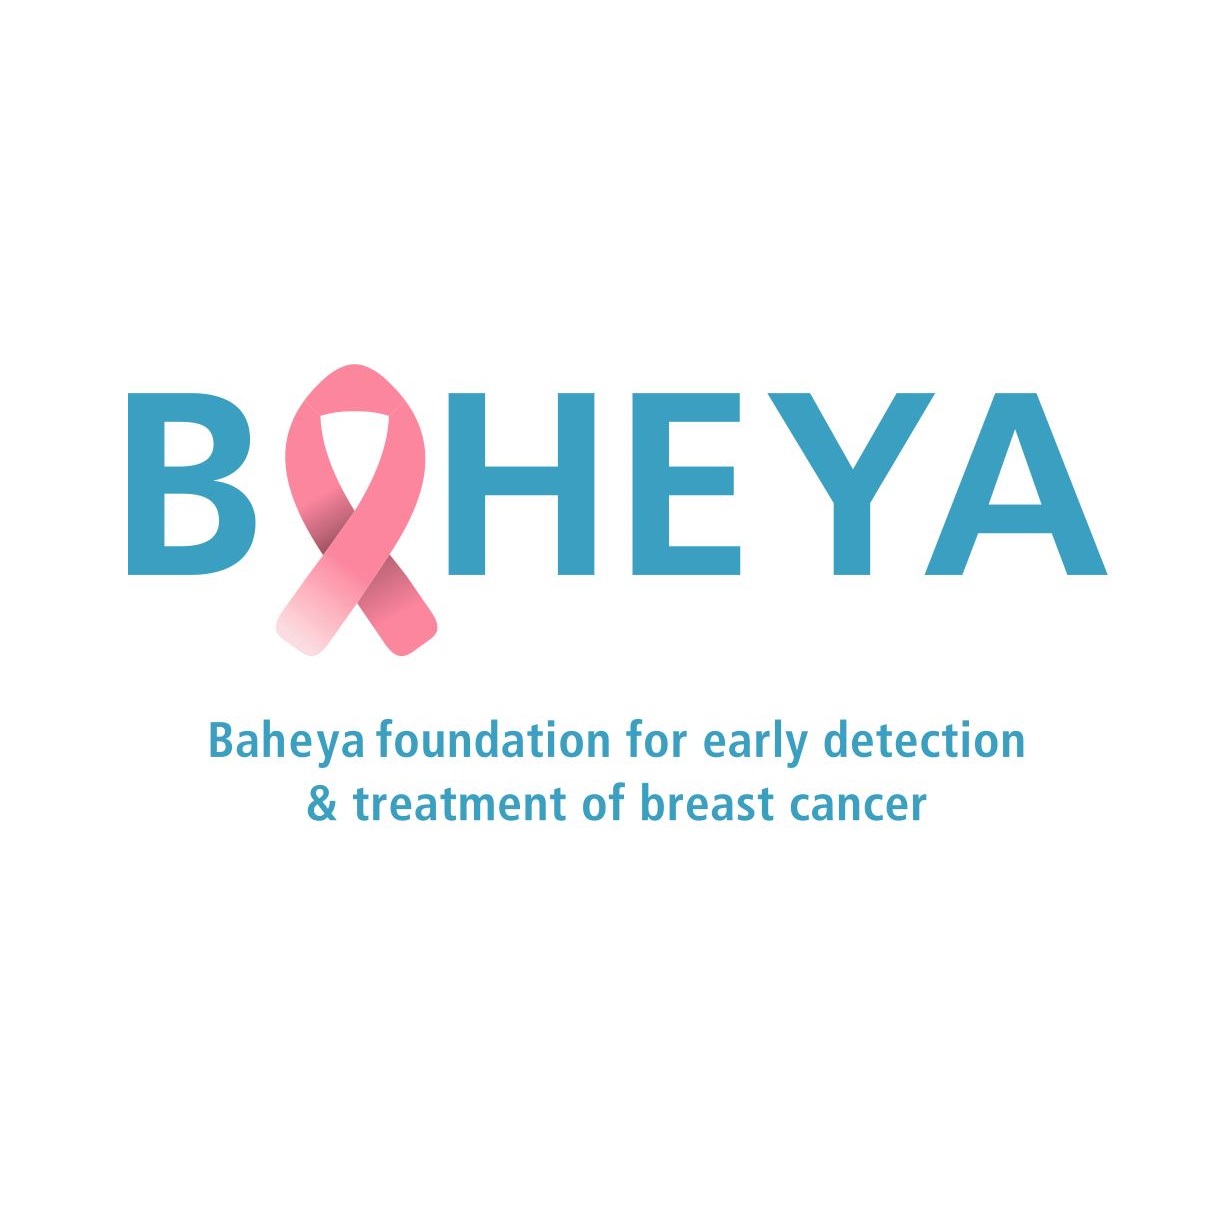 Baheya Hospitals Group